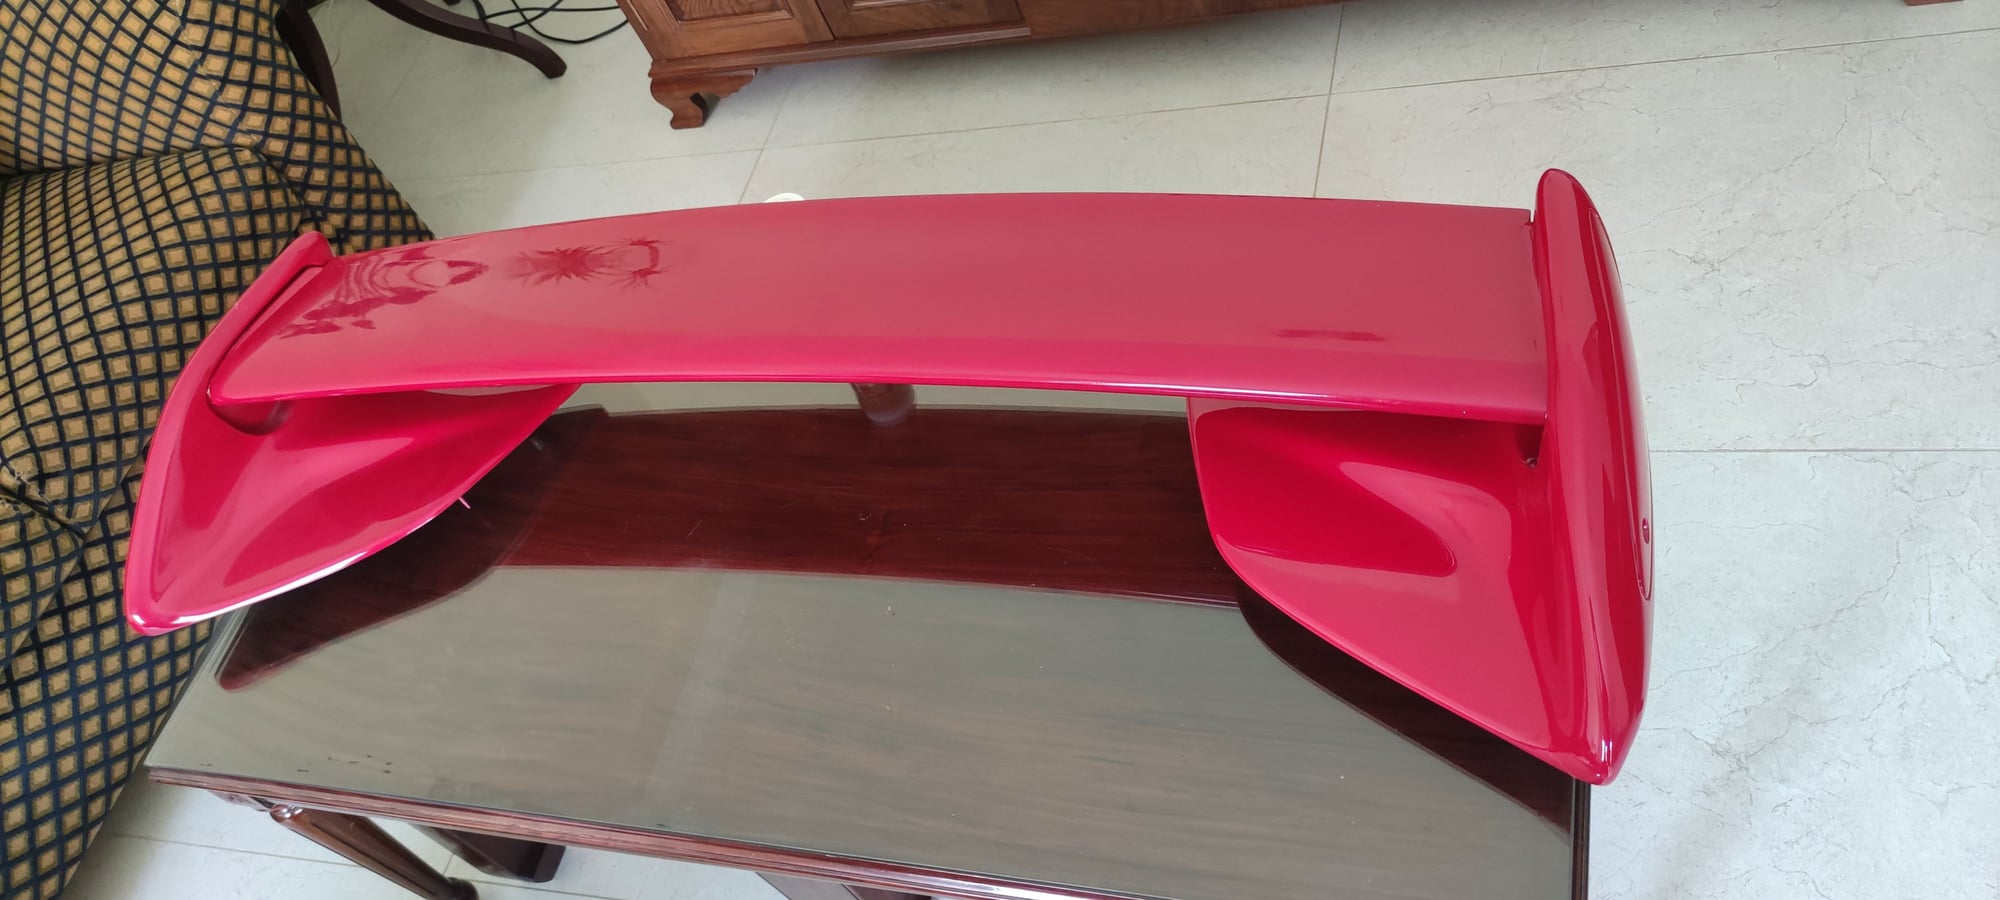 Exterior Body Parts - OEM RX7 FD 99 Spec Wing VR - Used - 0  All Models - Karachi, Pakistan